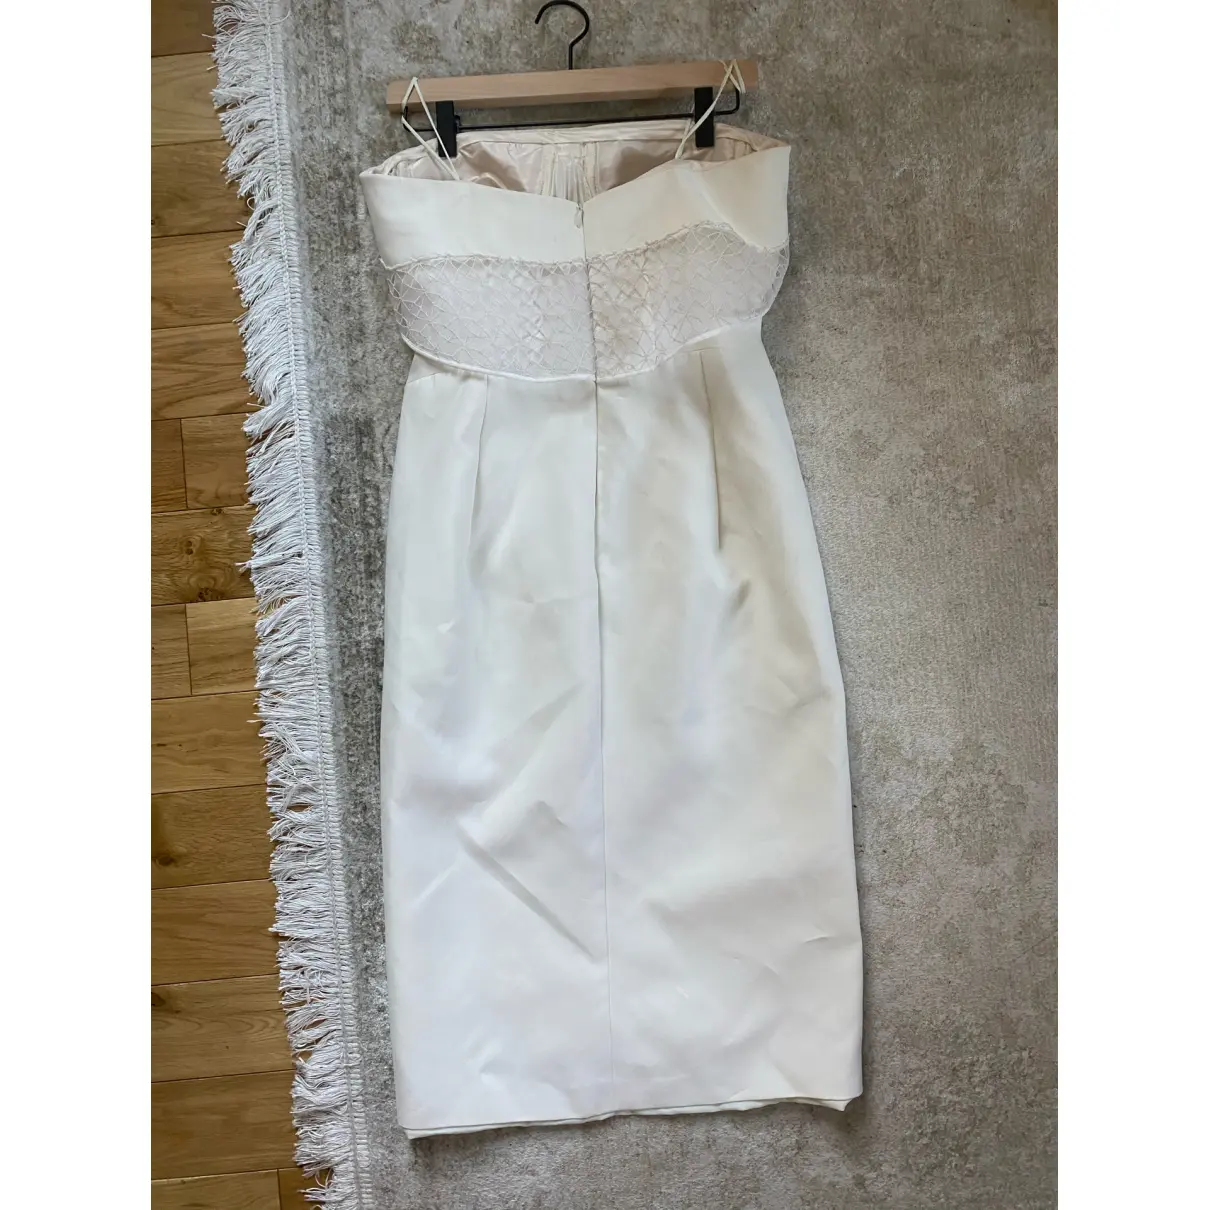 Buy Zac Posen Silk mid-length dress online